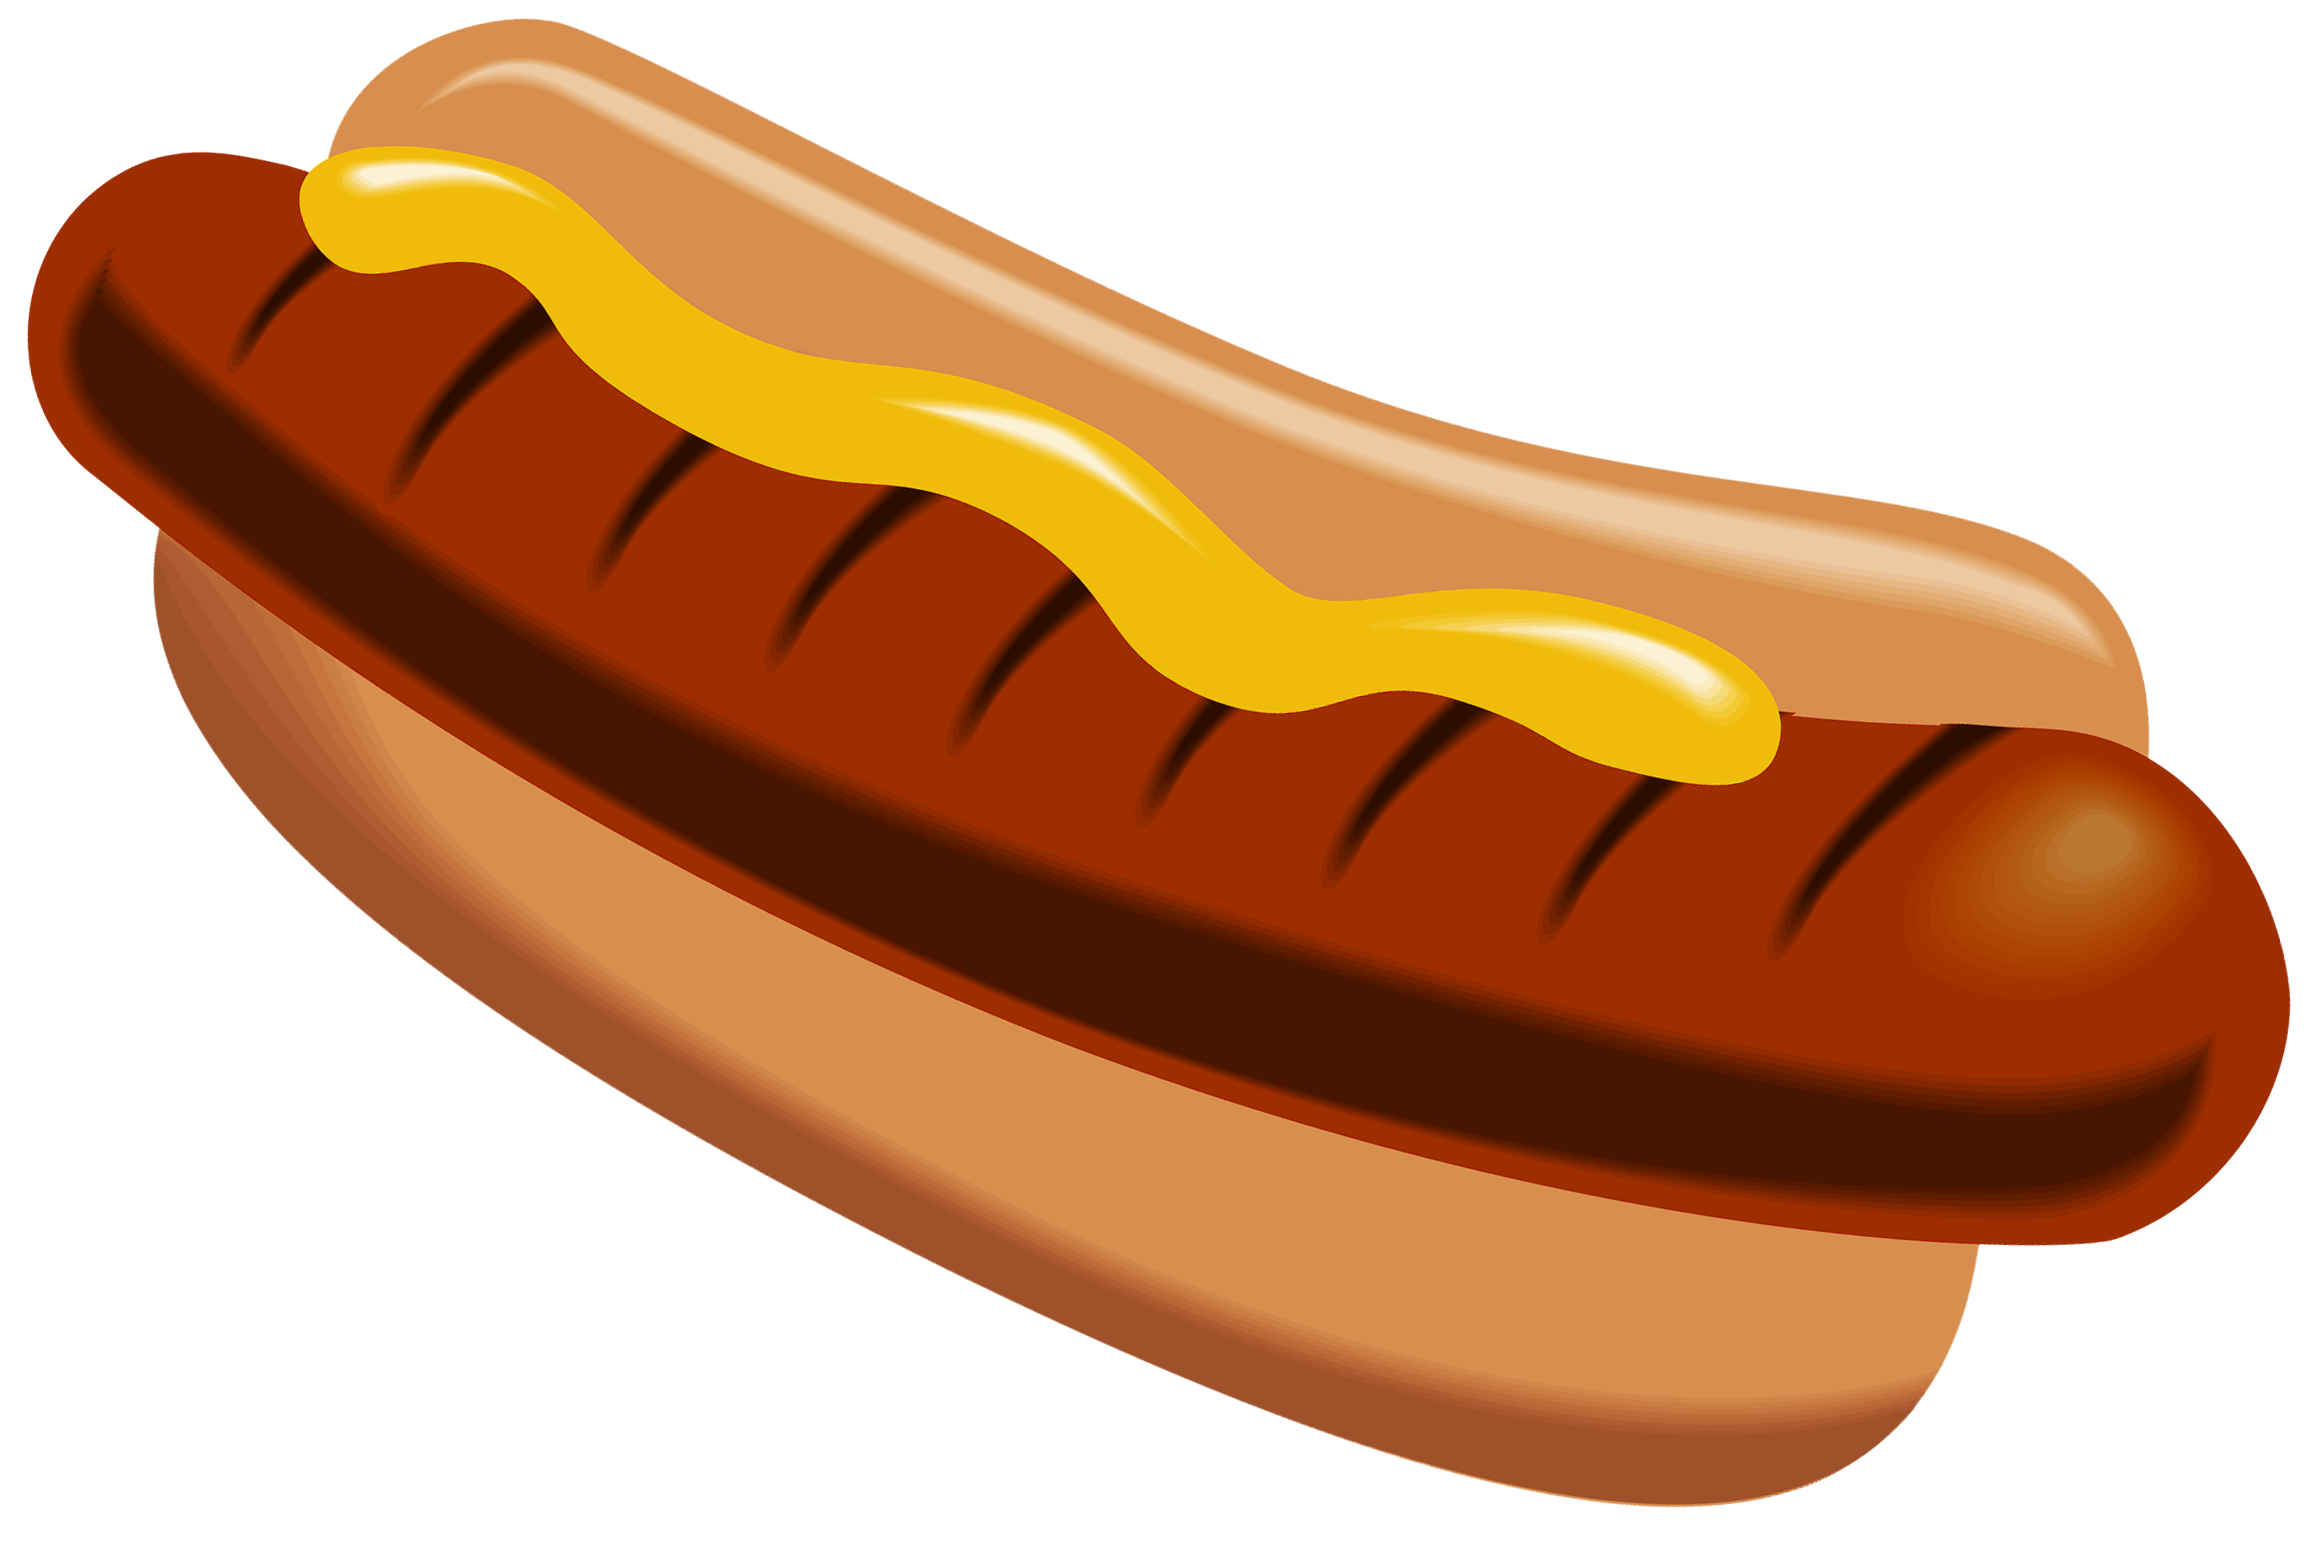 Hot dog with mustard. Hamburger clipart hotdog